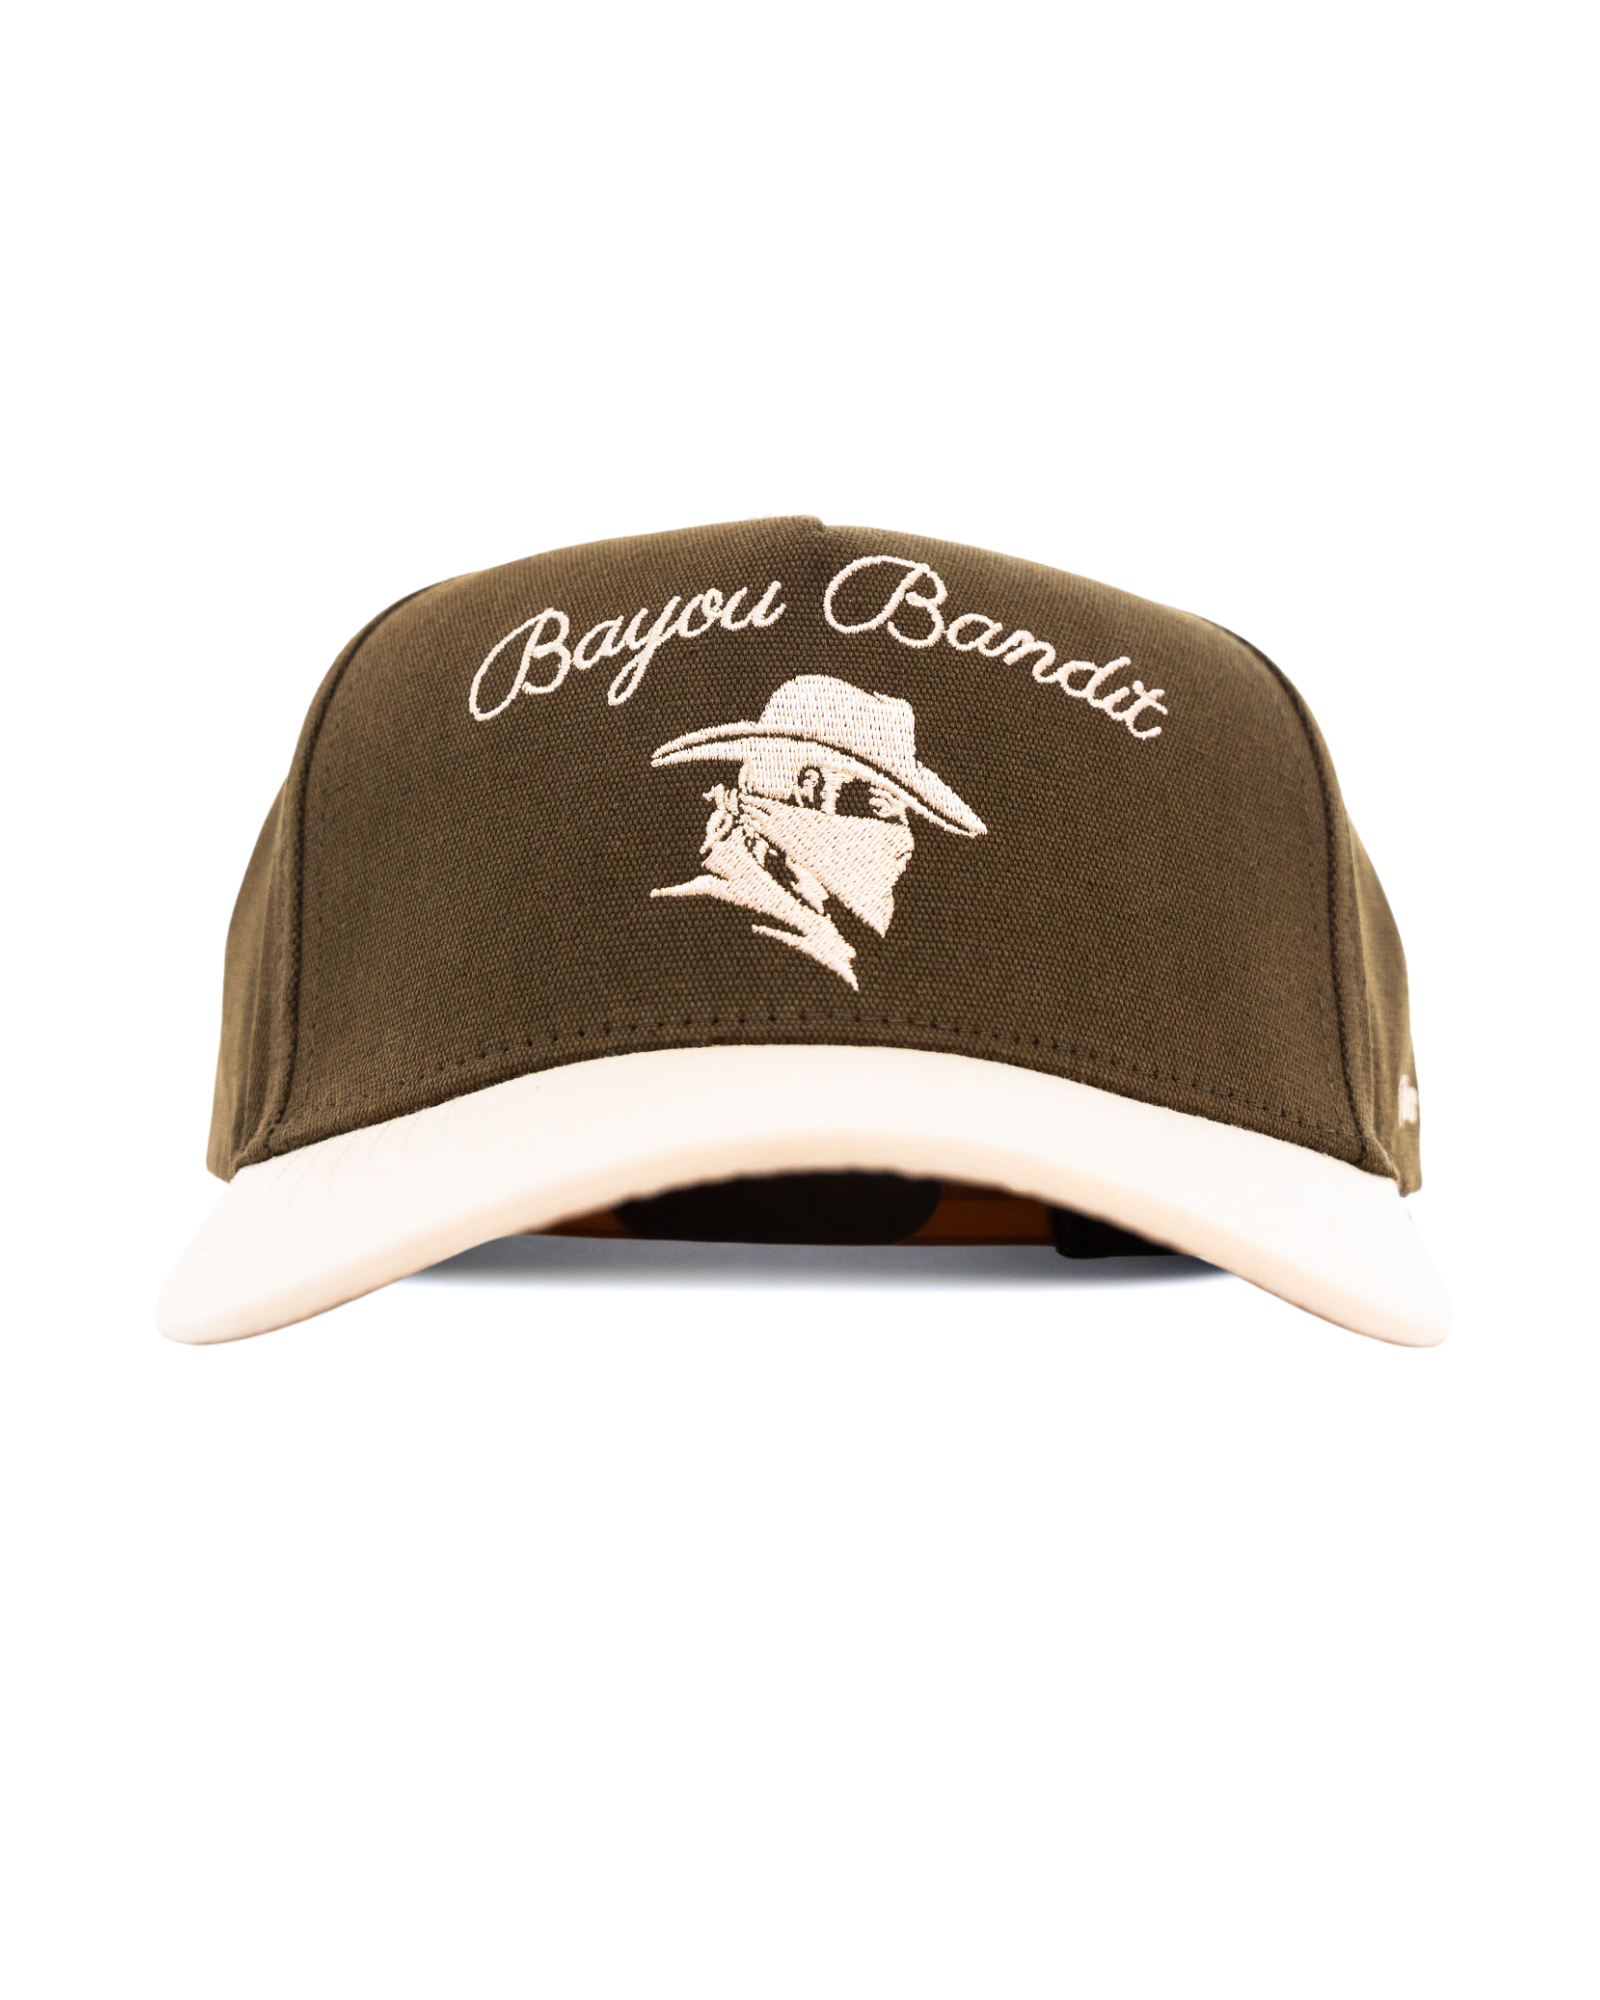 Bayou Bandit Hat